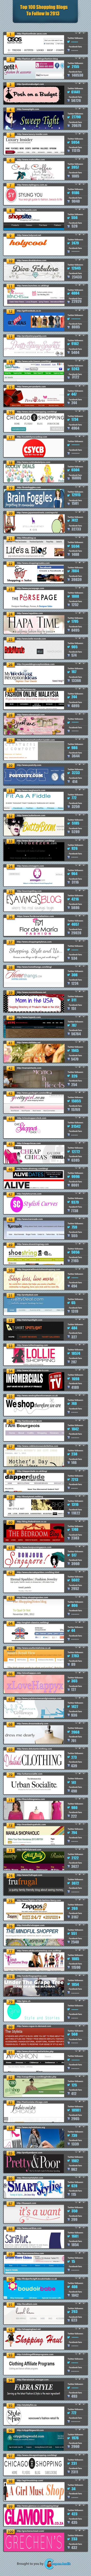 Top 100 Shopping blogs to follow